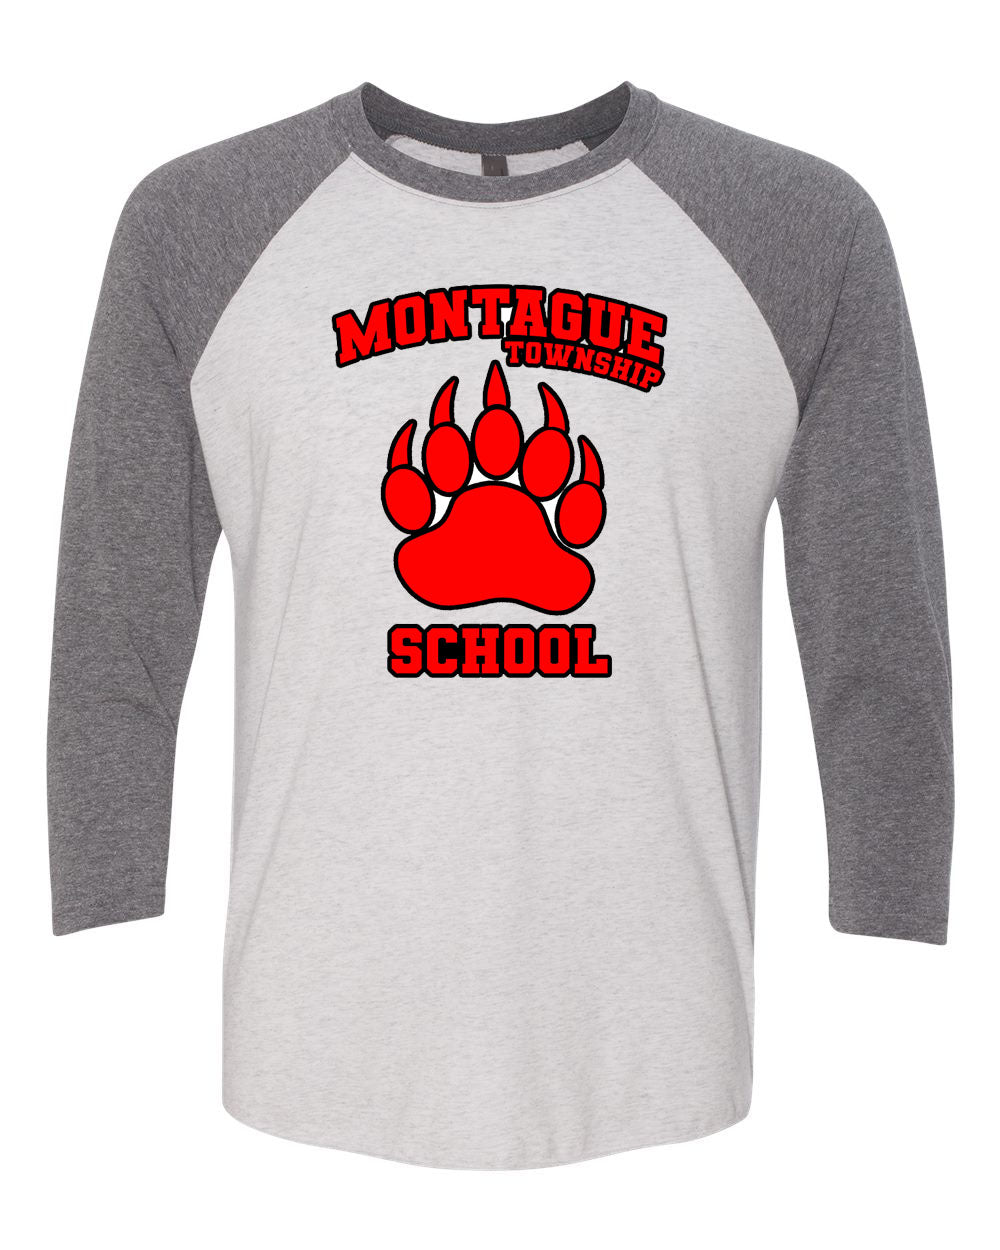 Montague design 2 raglan shirt